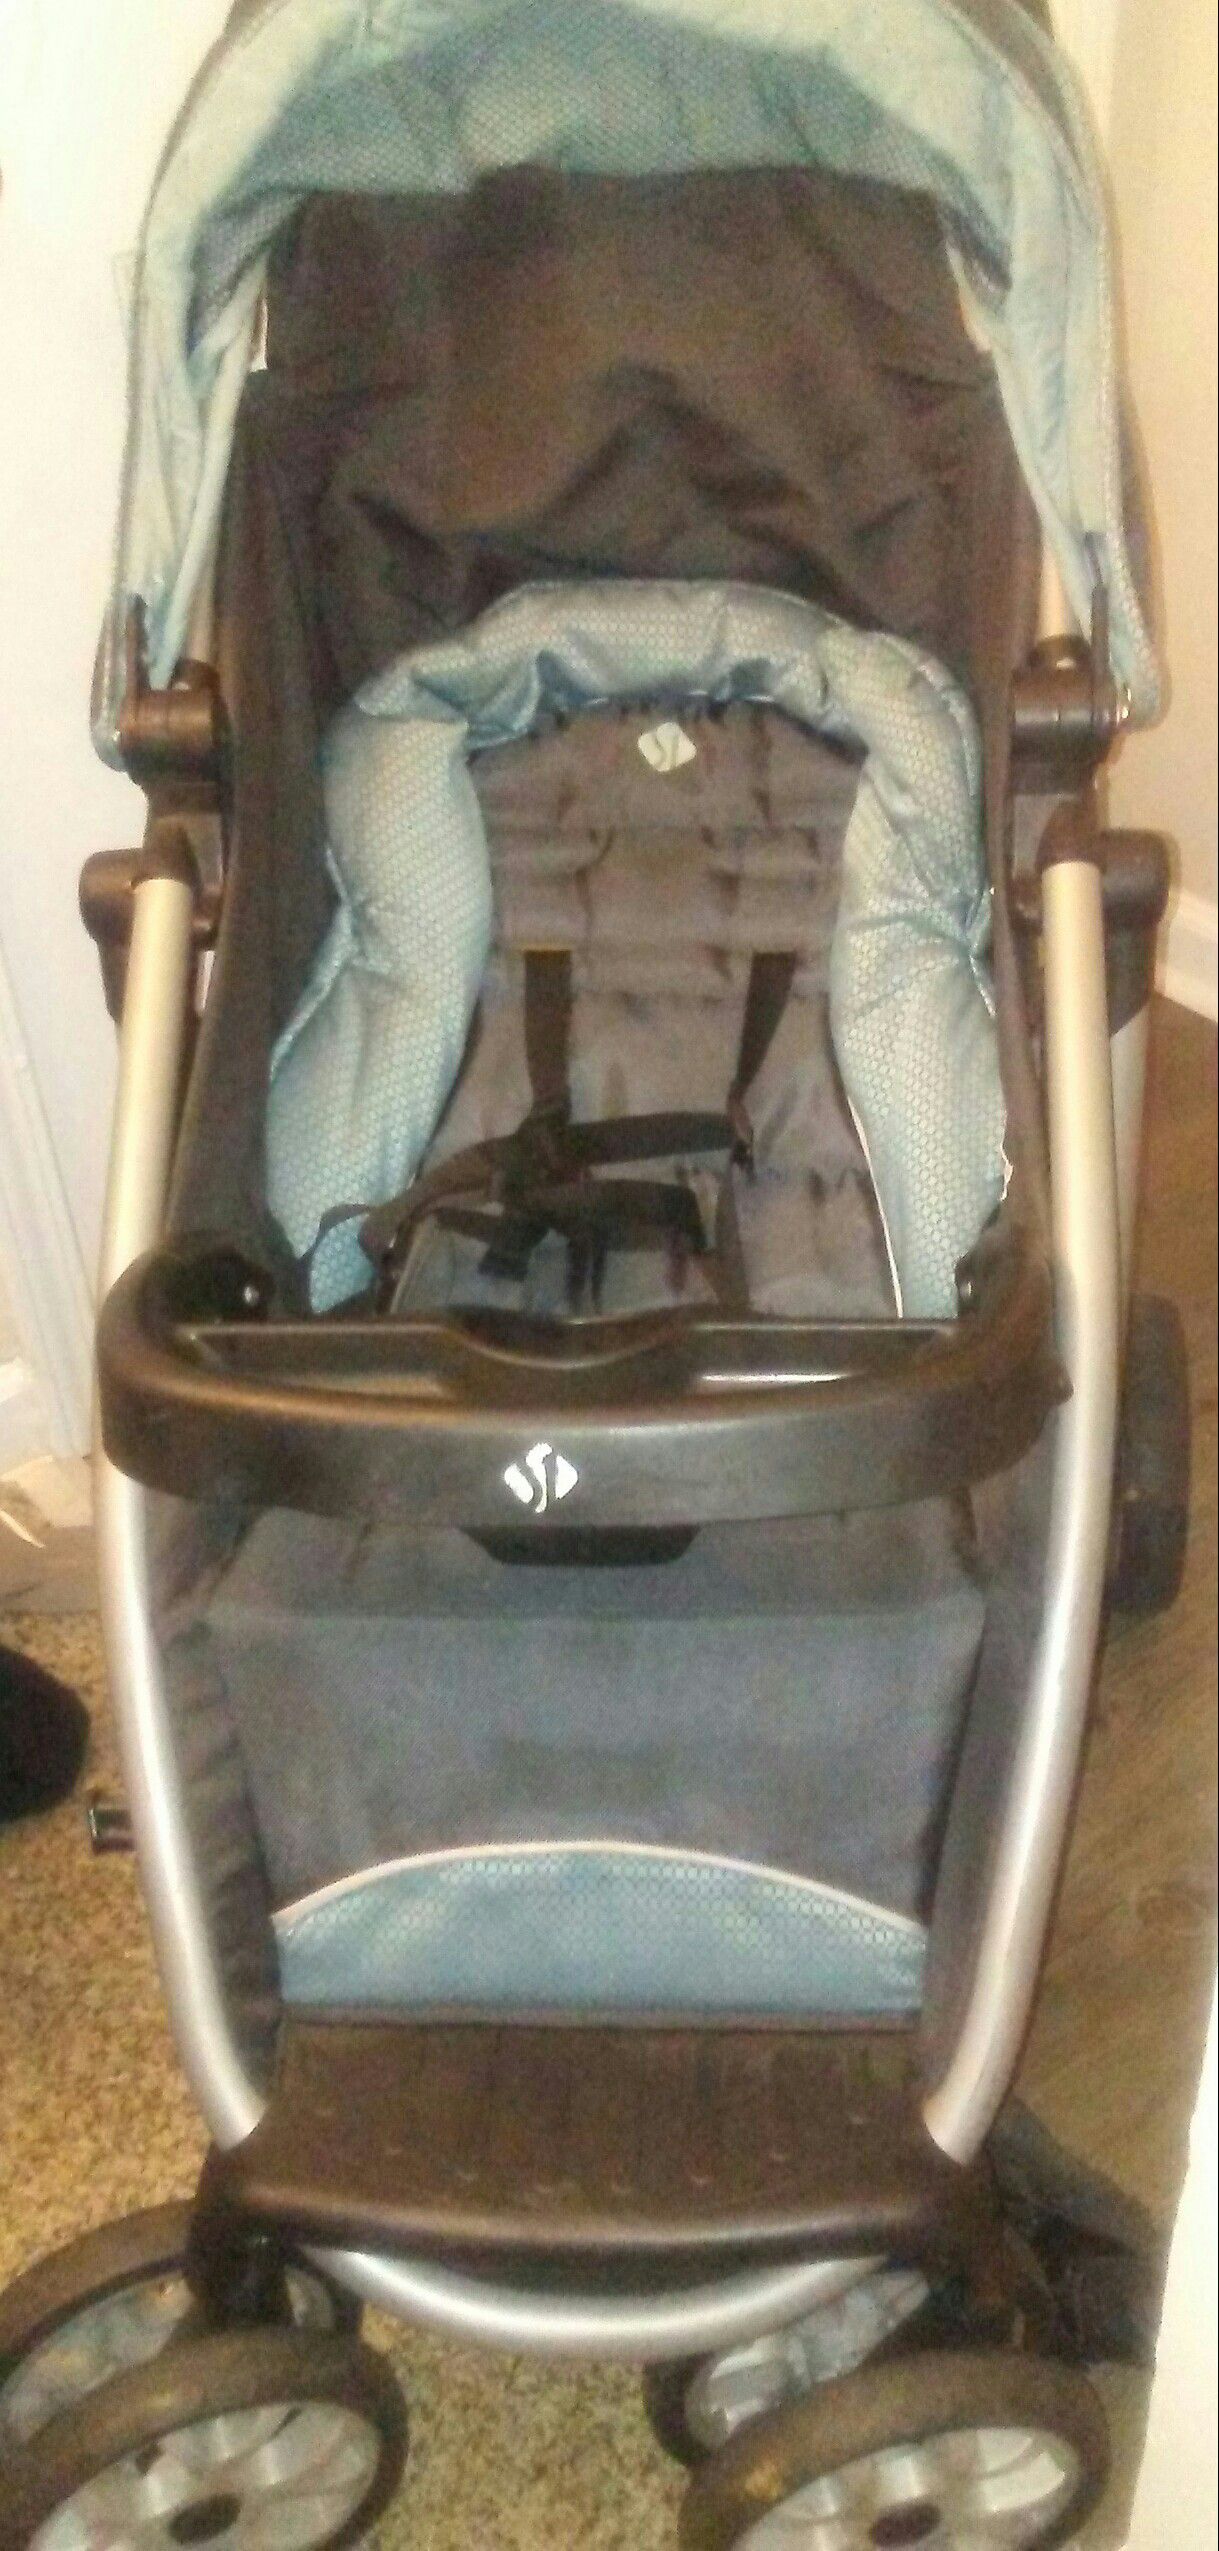 Car seat & stroller